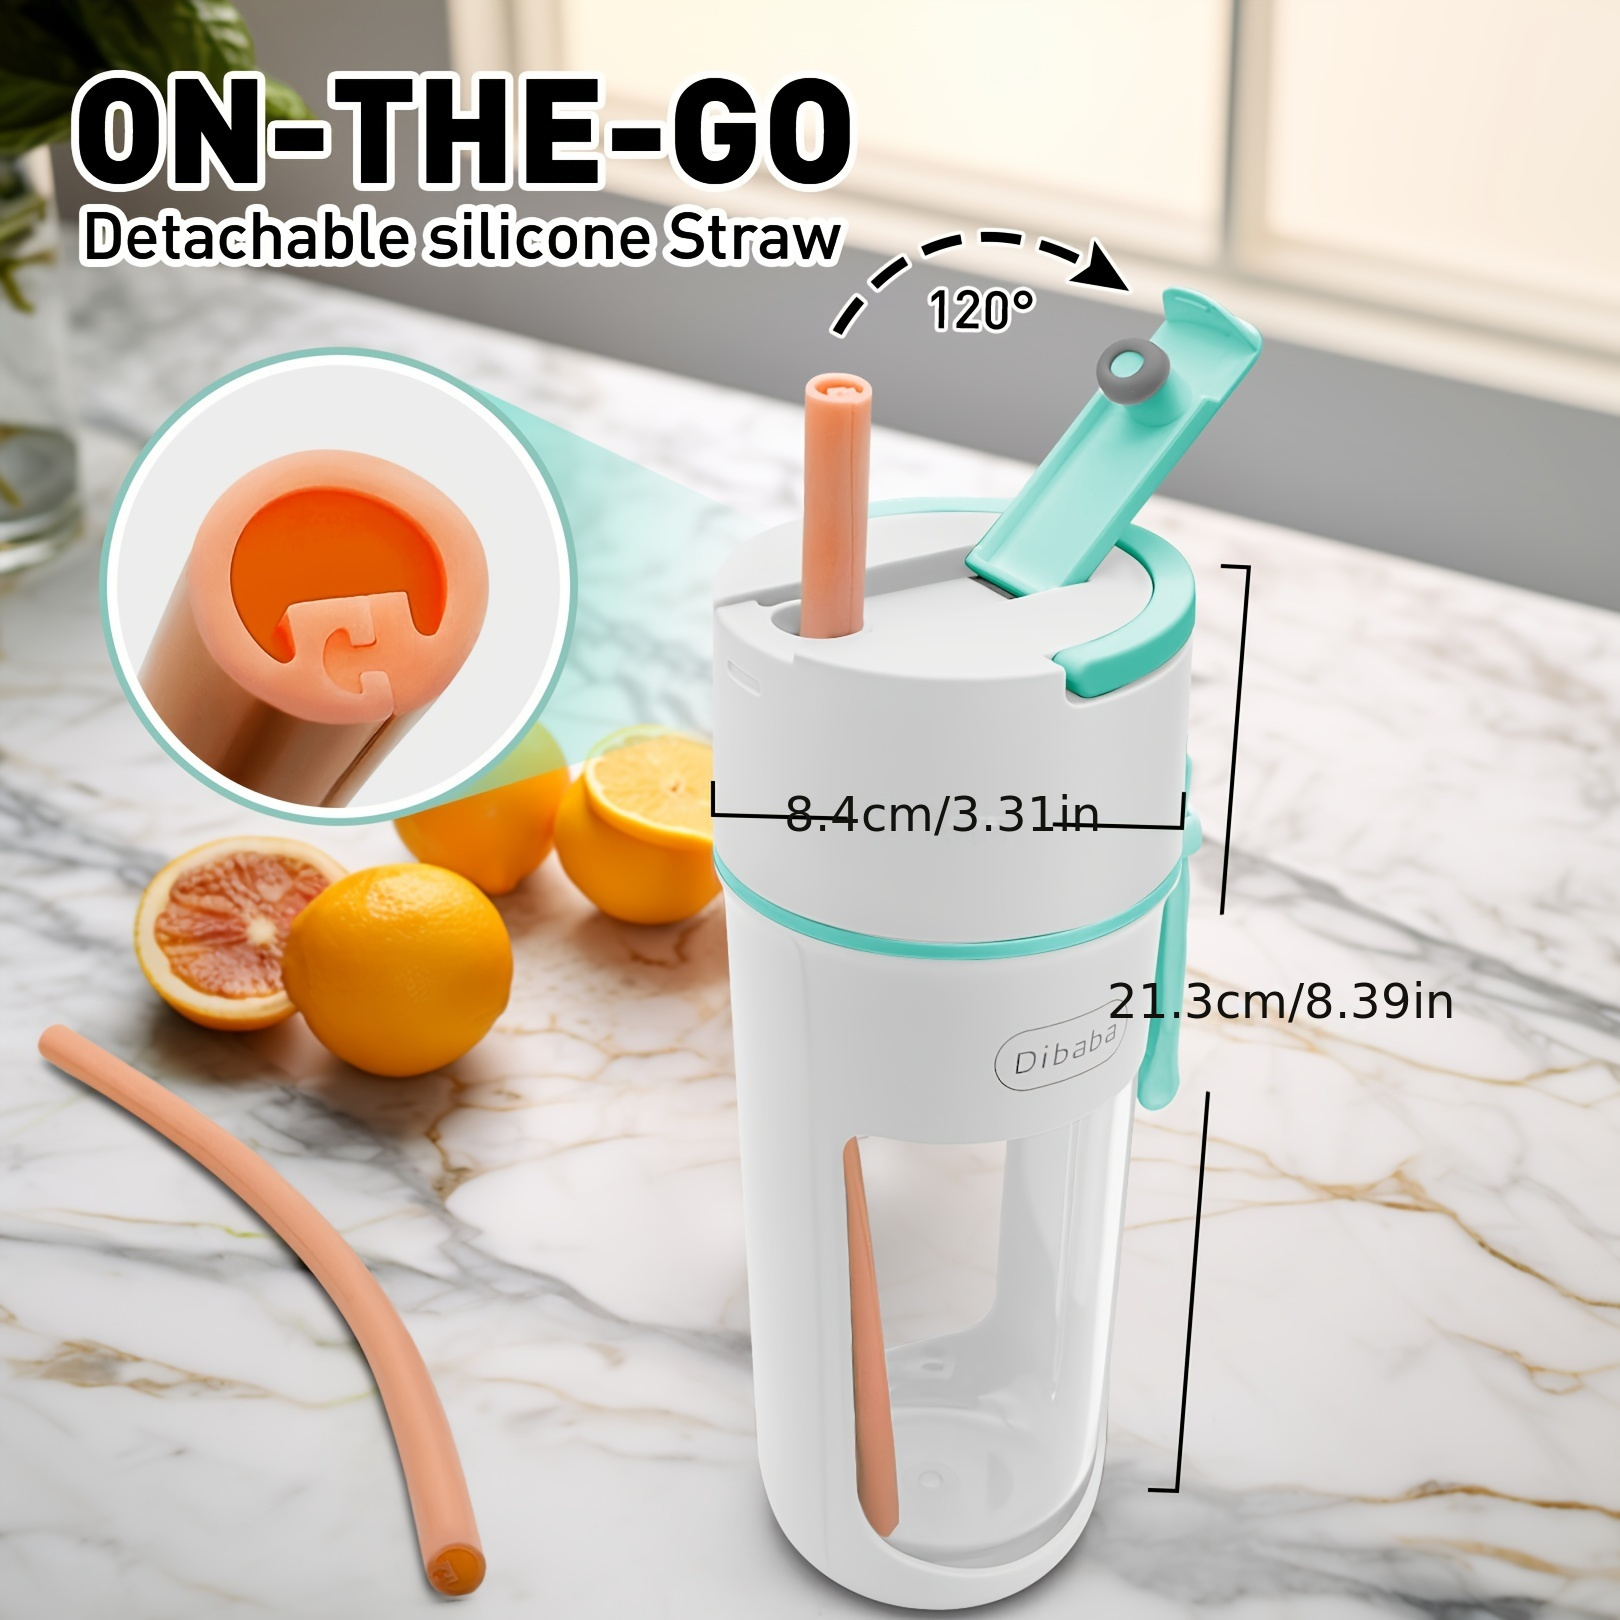 Blender Cup - Portable Blender for On-The-Go